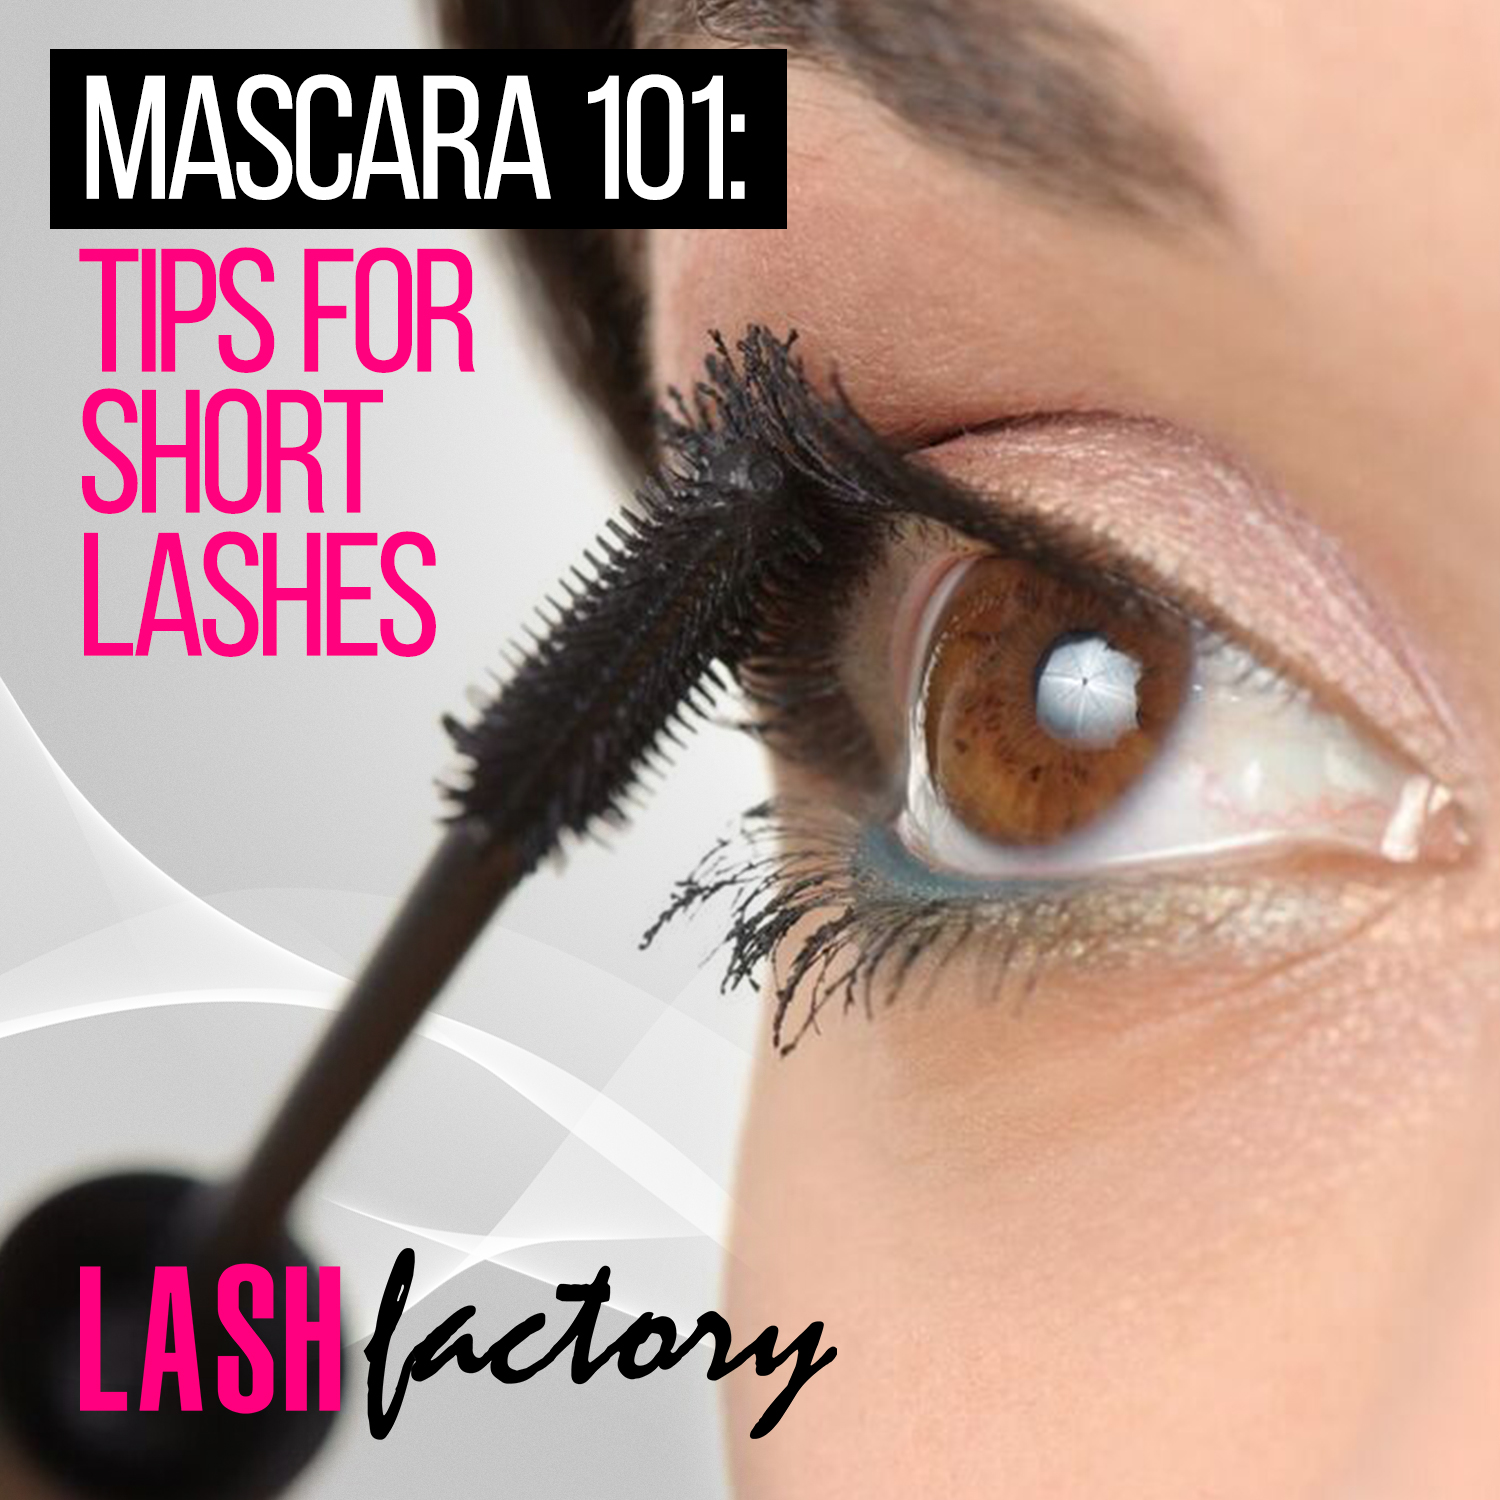 Mascara Application Tips